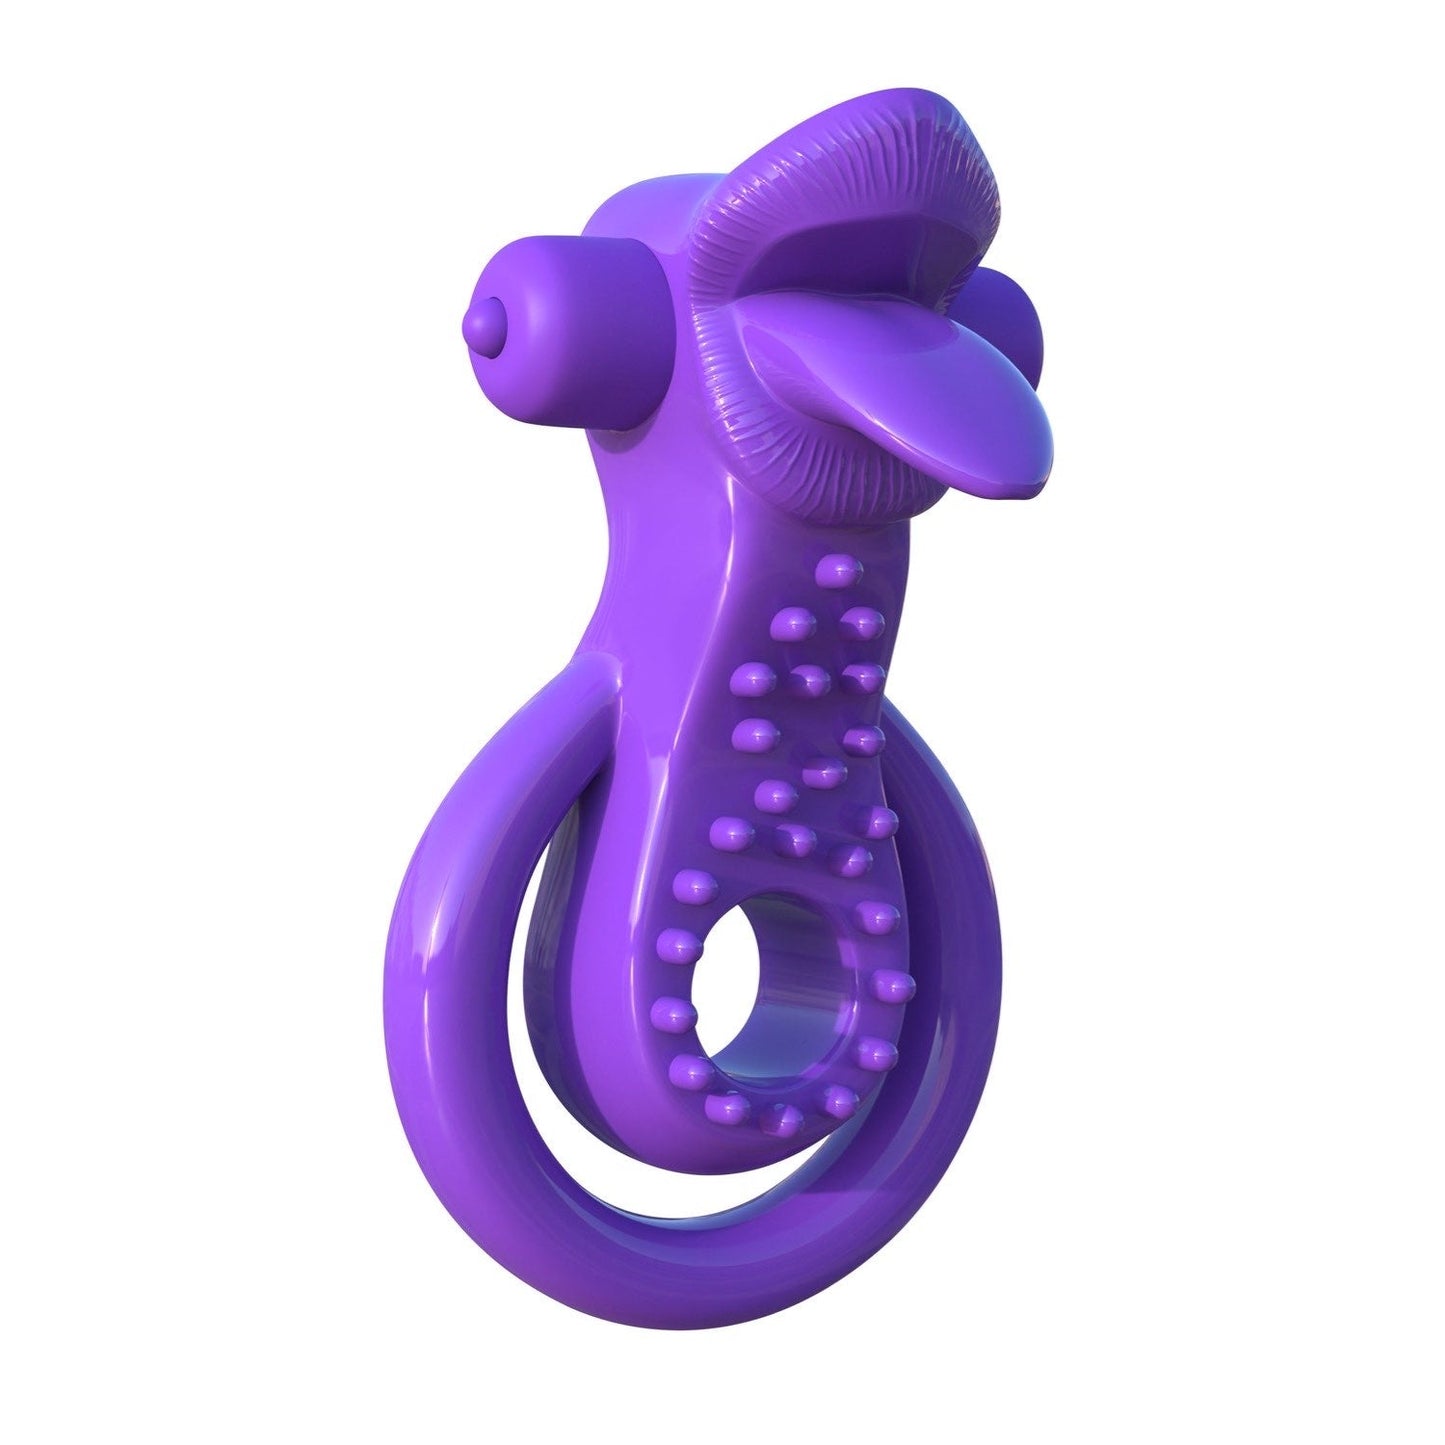 Fantasy C-ringz Lovely Licks Couples Ring - Purple Vibrating Cock & Ball Rings